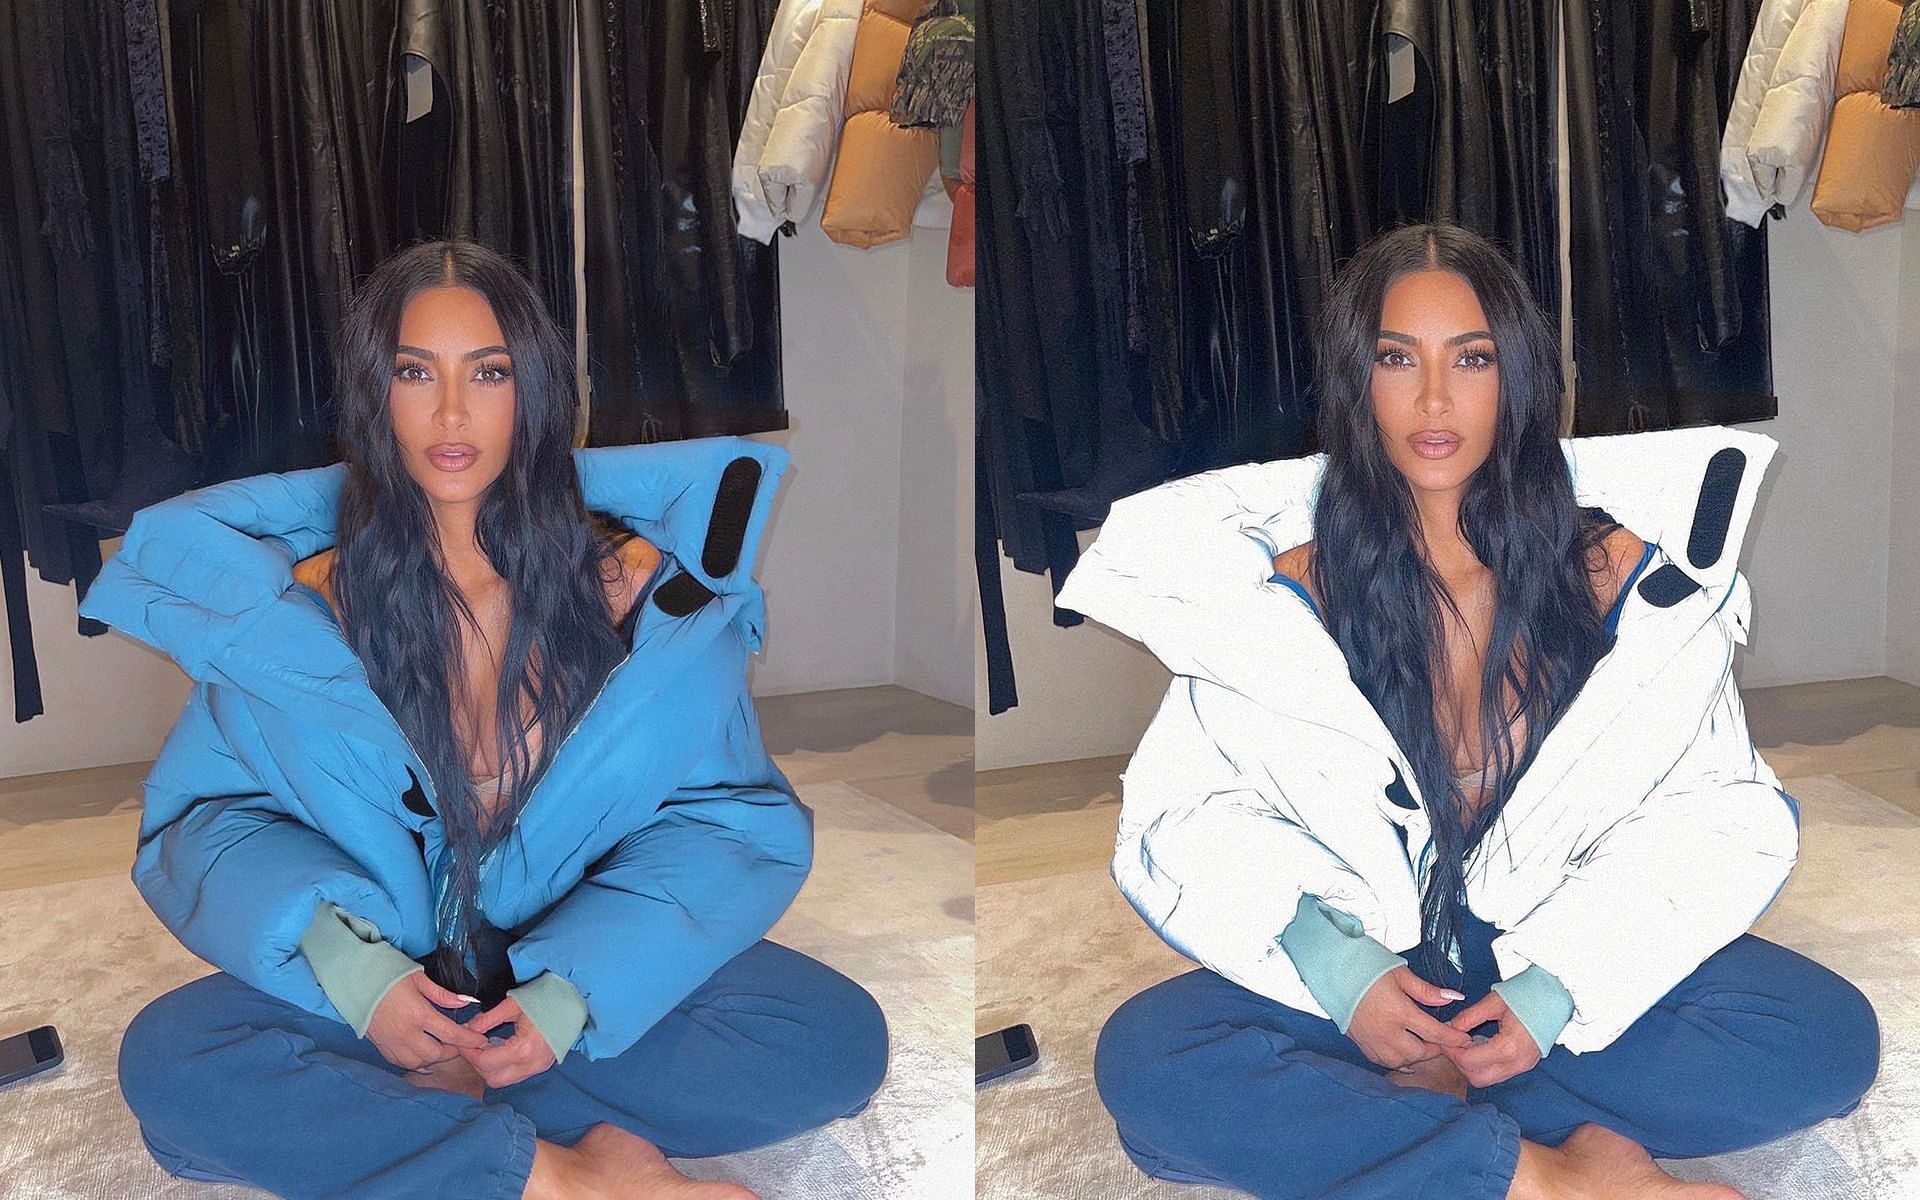 Kim spotted wearing a Yeezy jacket on Instagram (Images via kimkardashian/Instagram)